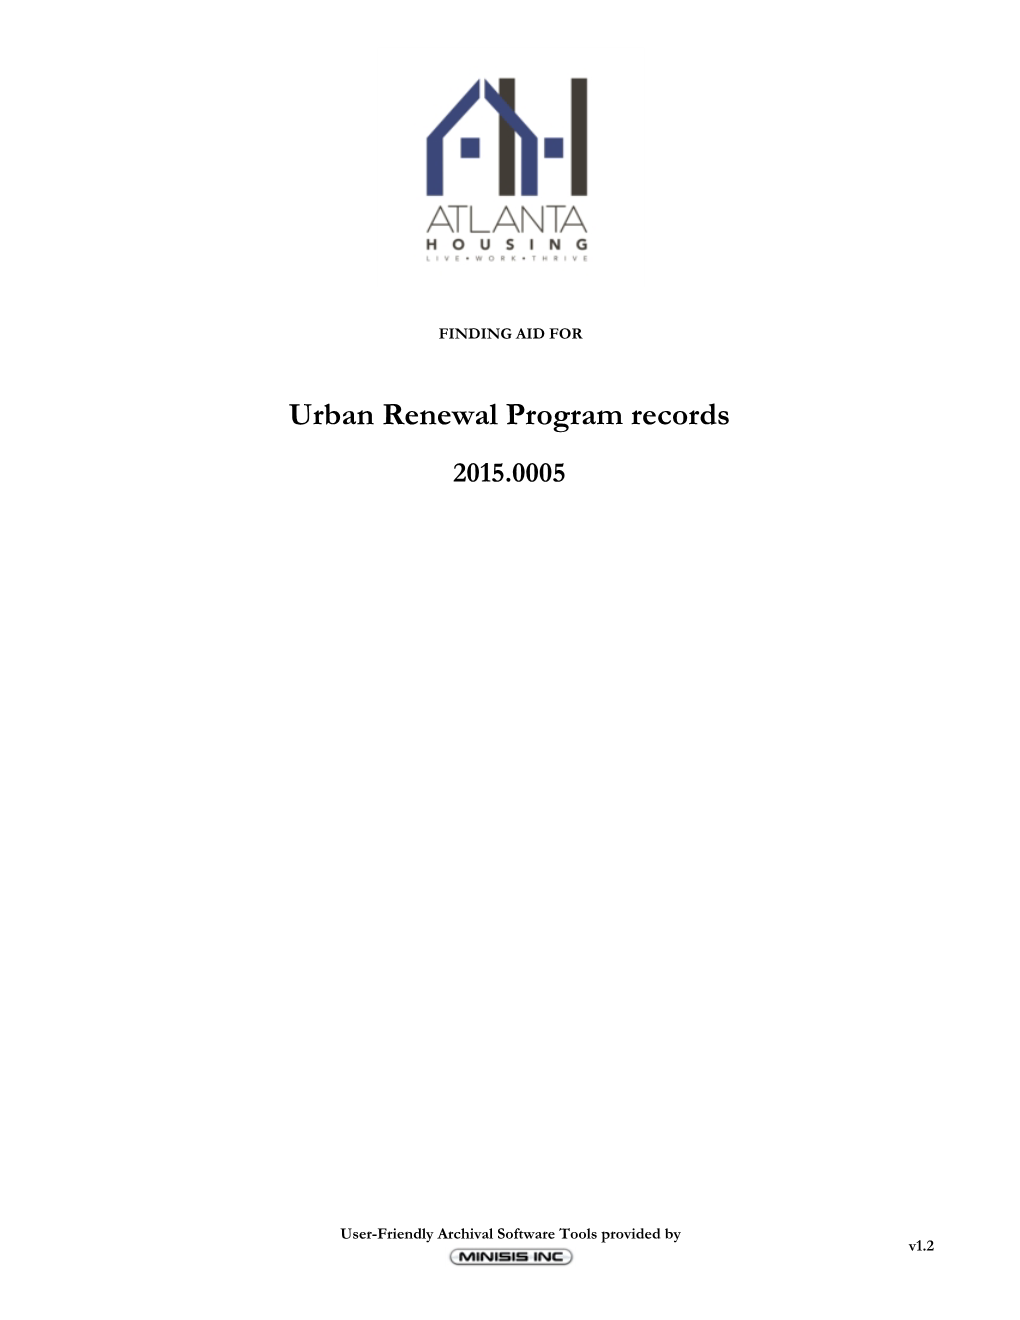 2015.0005 Urban Renewal Program Records